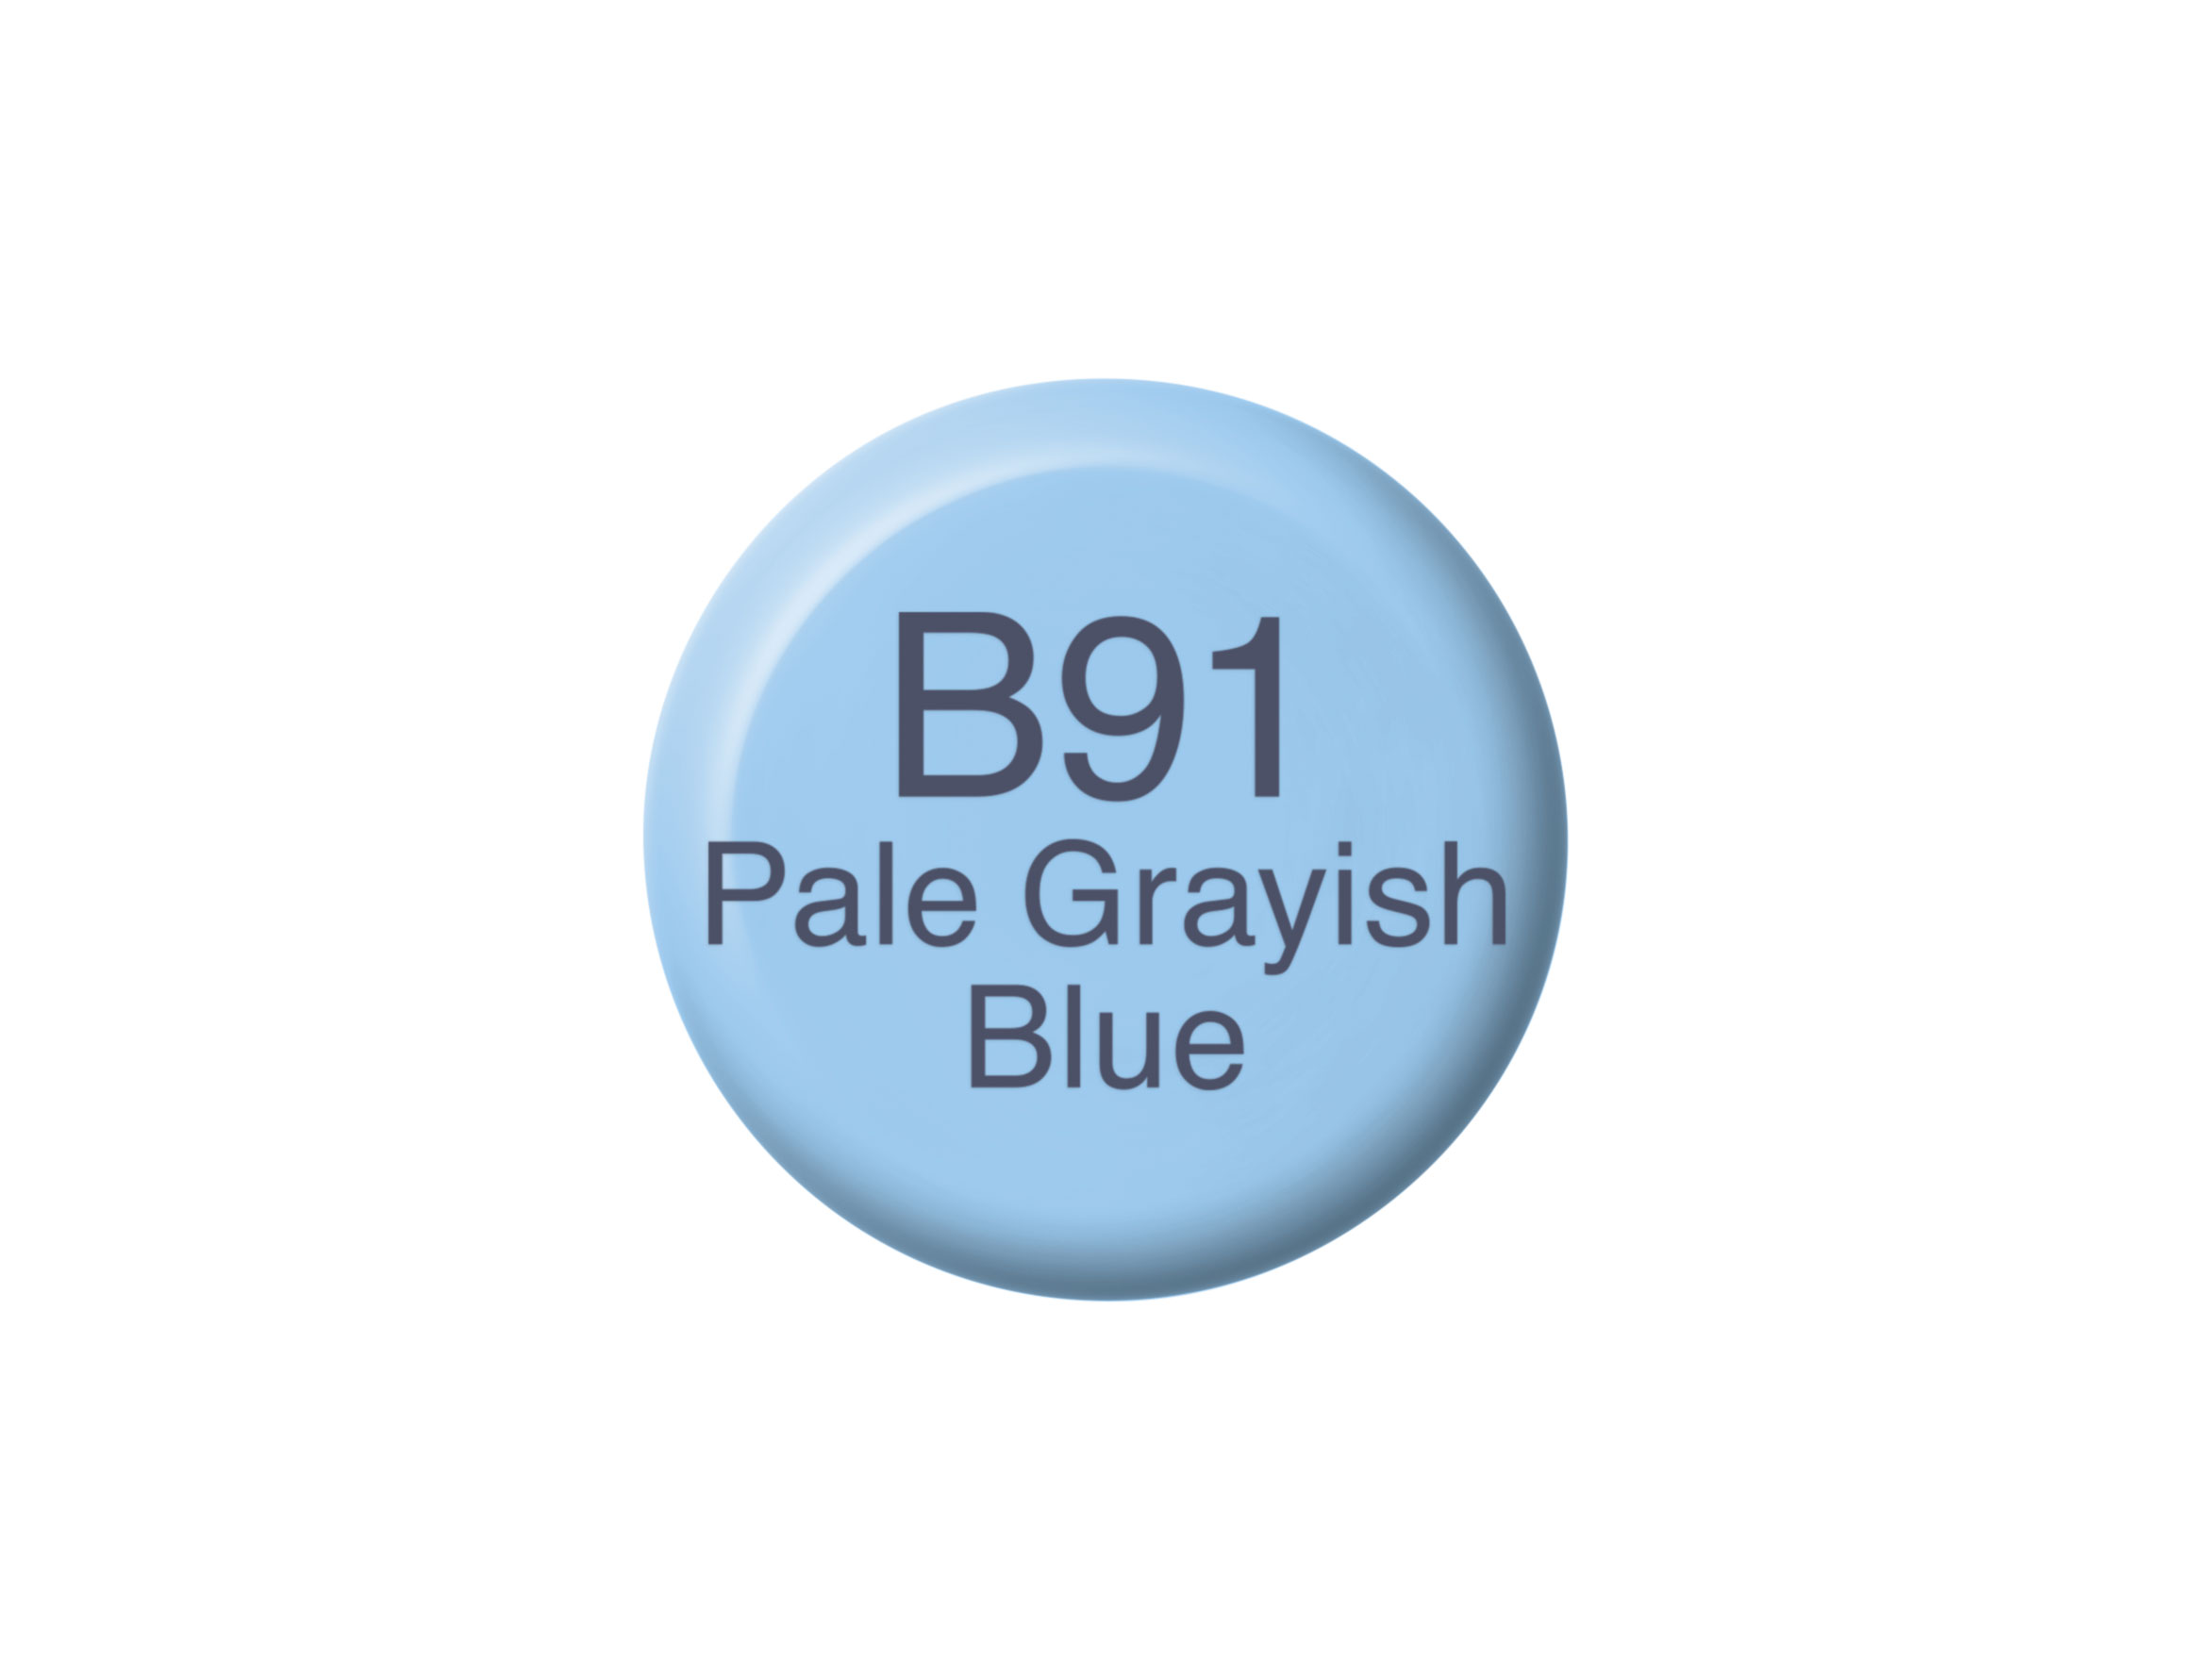 Copic Ink B91 Pale Grayish Blue